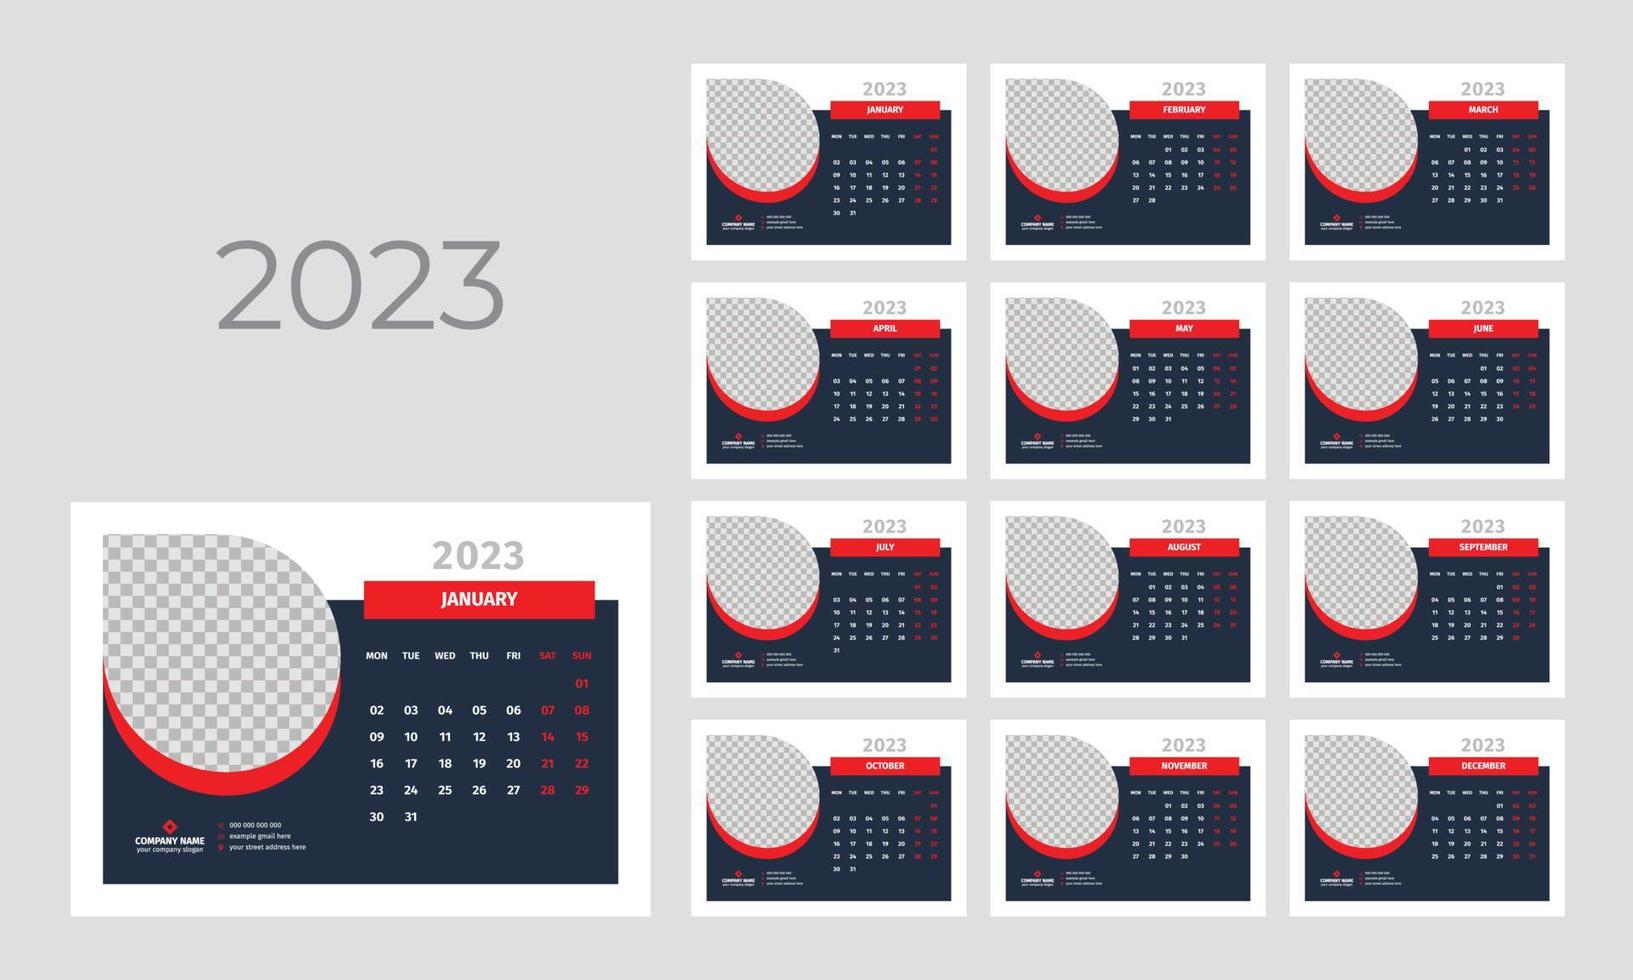 Desk Calendar 2023 Template vector